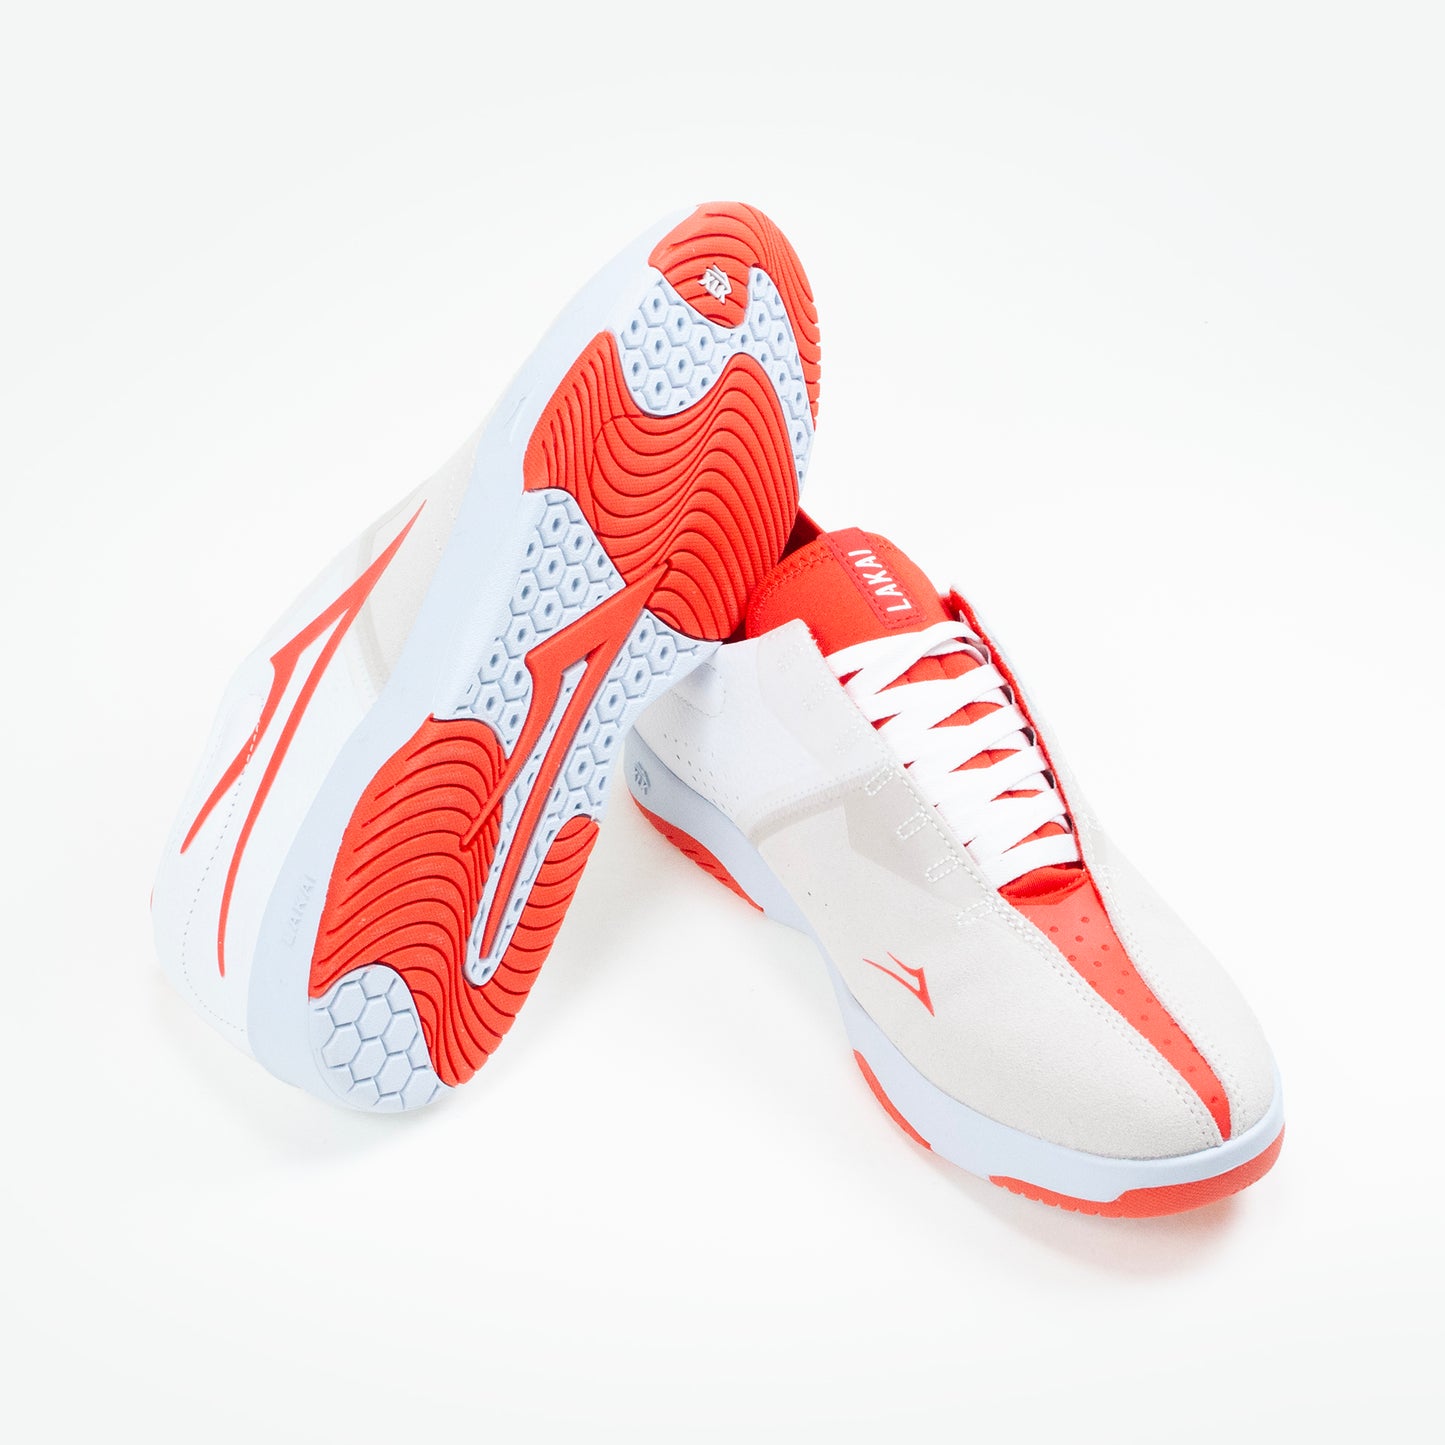 Lakai Mod Cup Skate Shoe - White/ Flame - Prime Delux Store